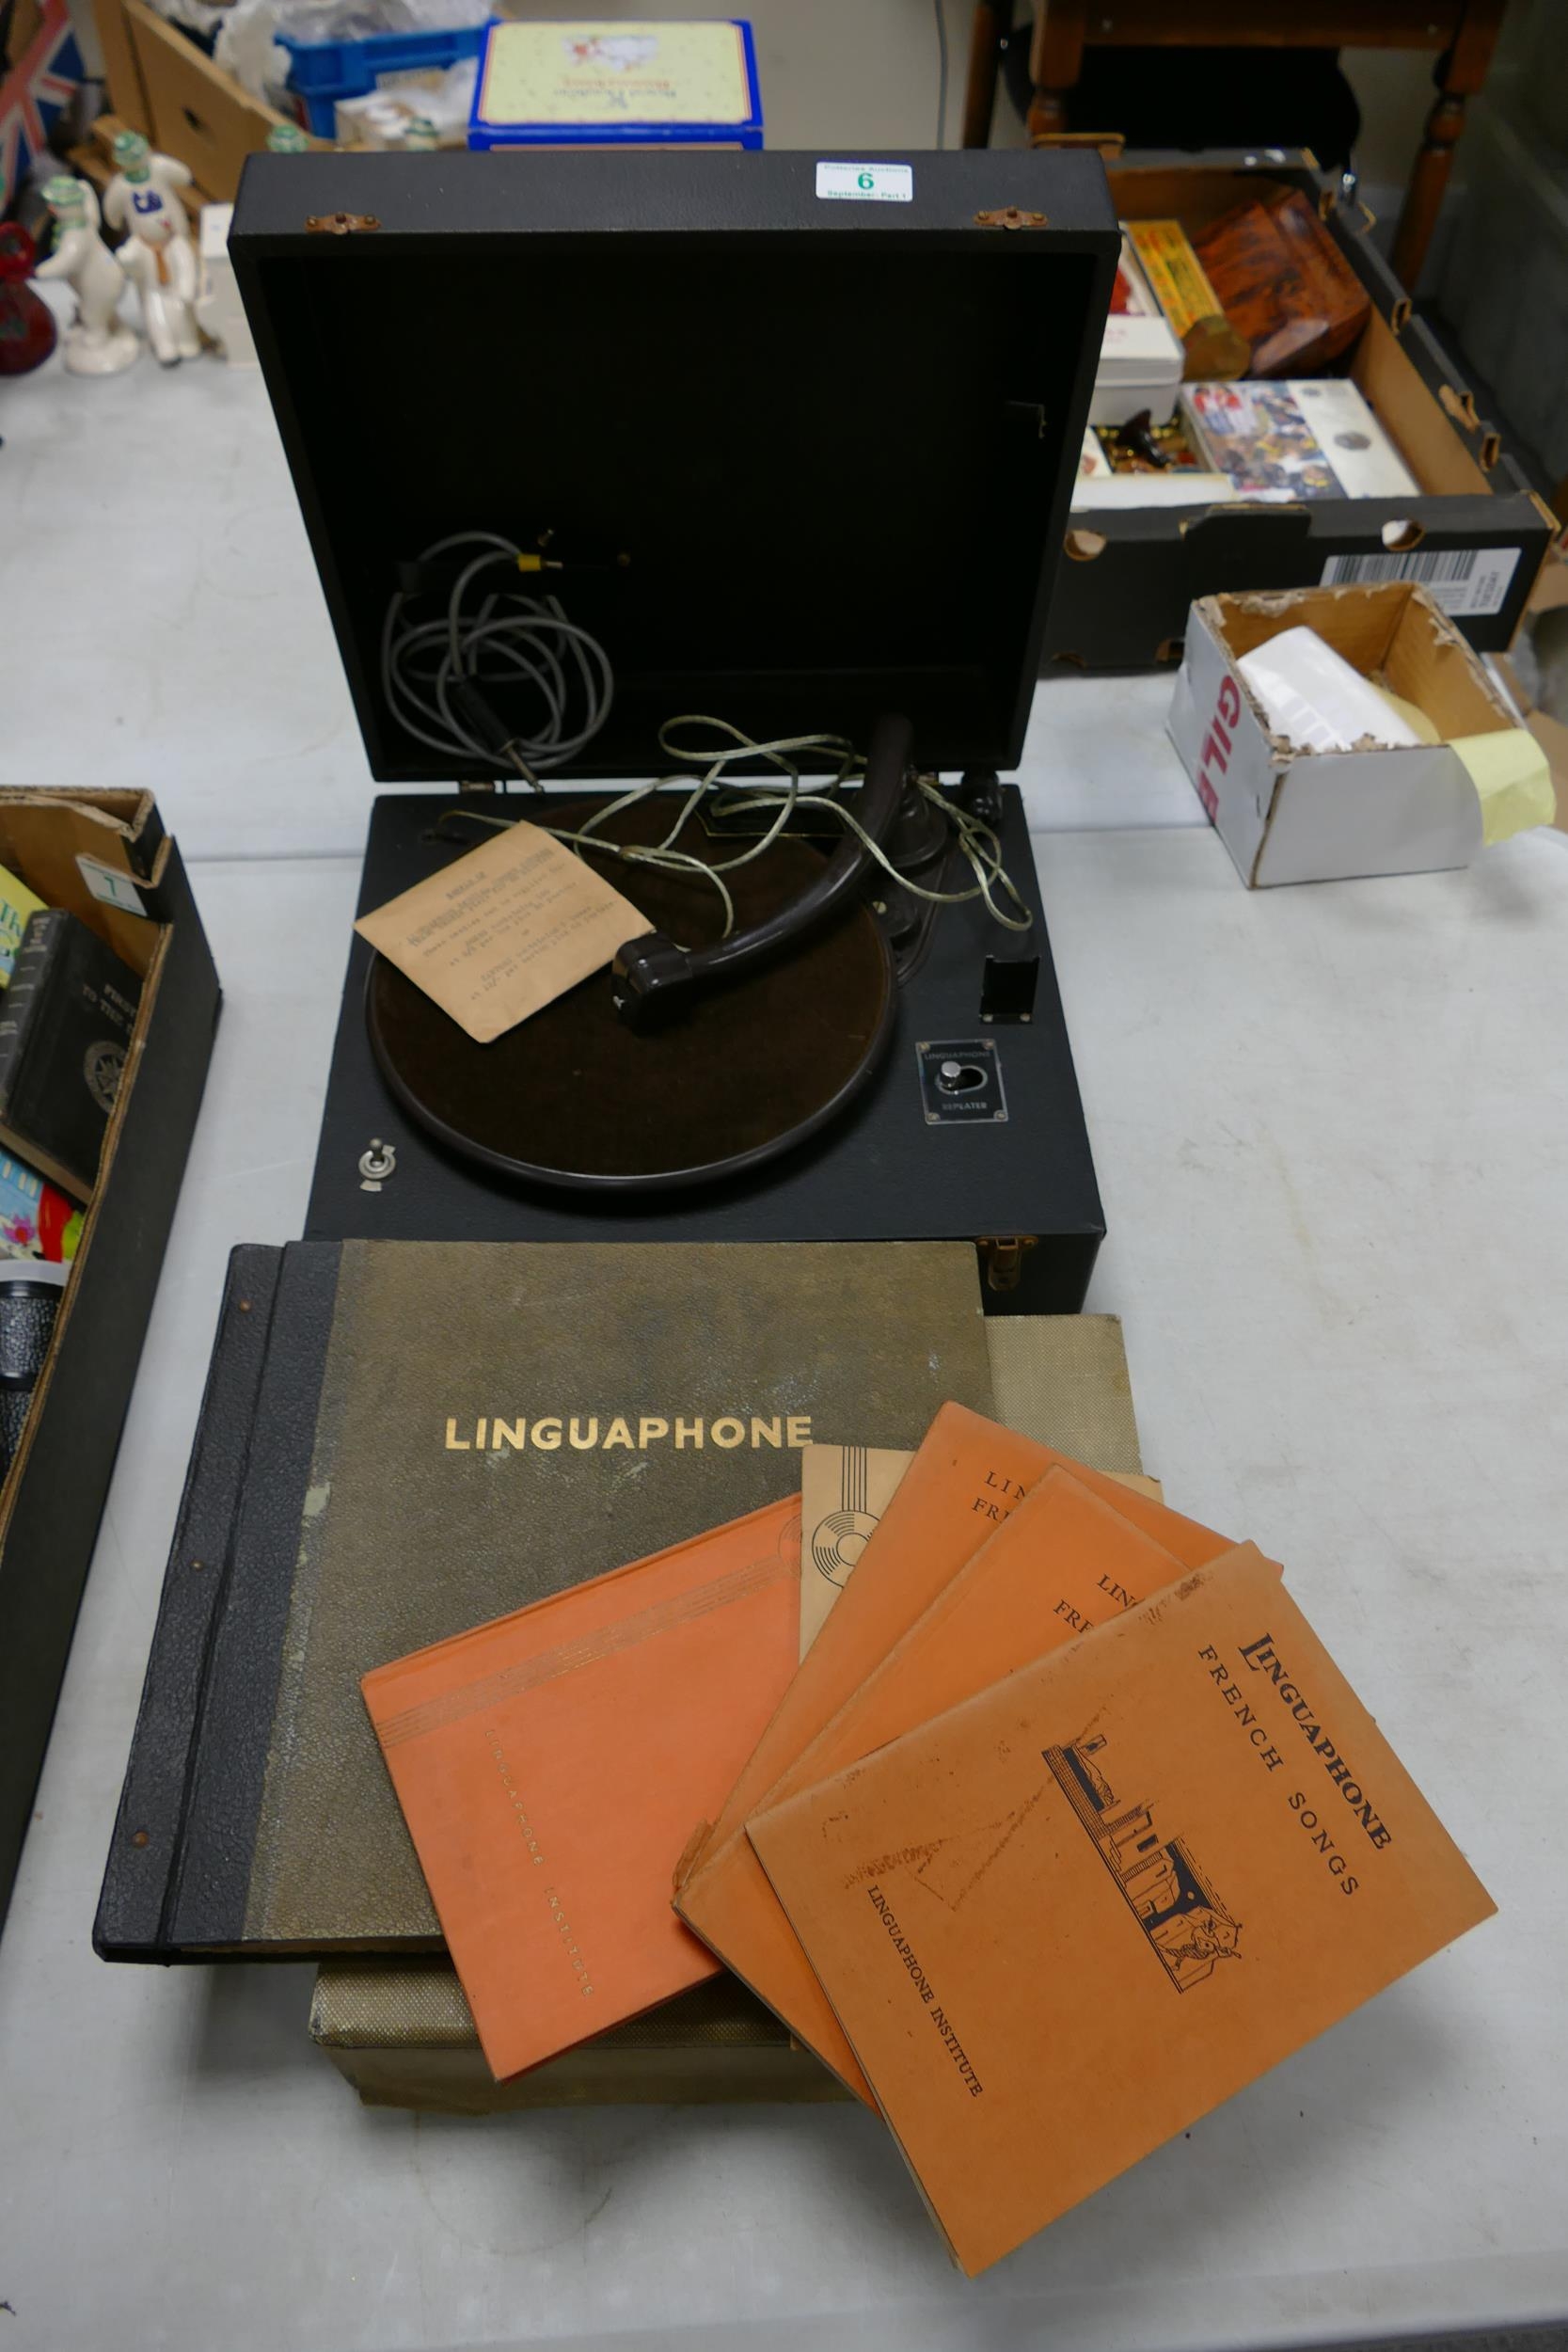 Vintage Linguaphone Gramophone & records & leaflets